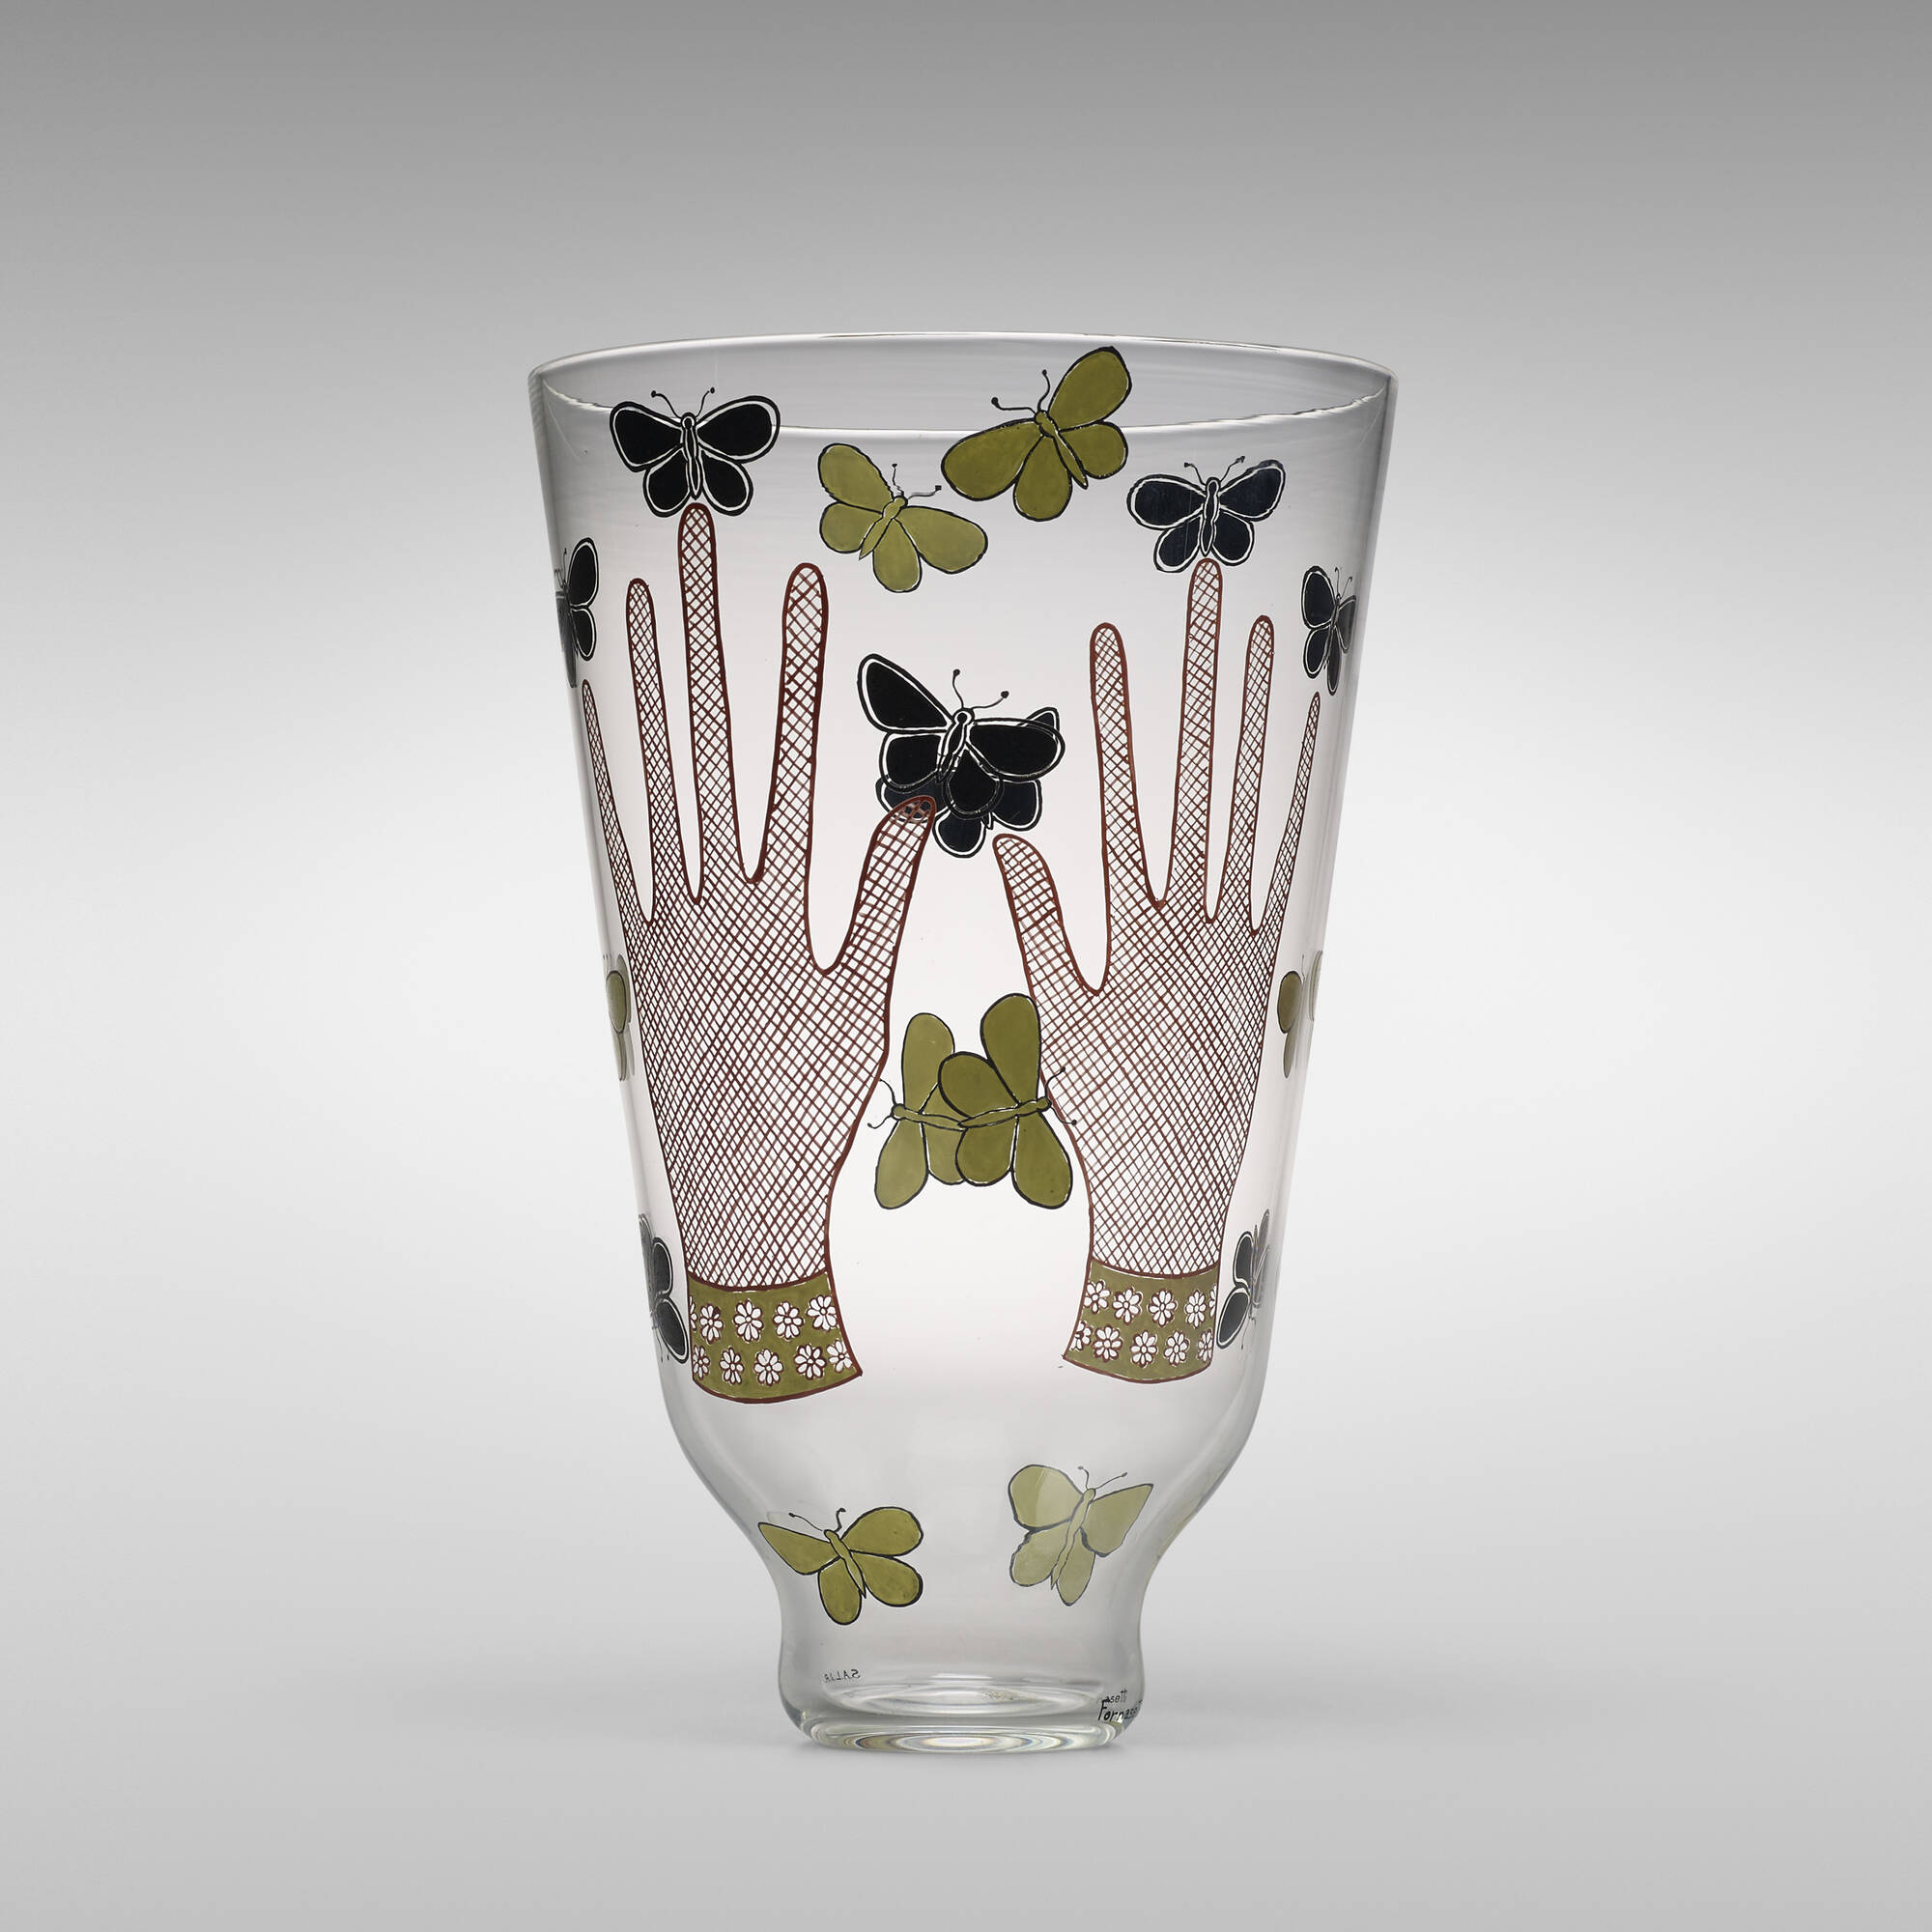 Kosciuszko kooi Afgeschaft 252: PIERO FORNASETTI, Mani con Farfalle A Smalti vase < Important Italian  Glass, 13 June 2015 < Auctions | Wright: Auctions of Art and Design